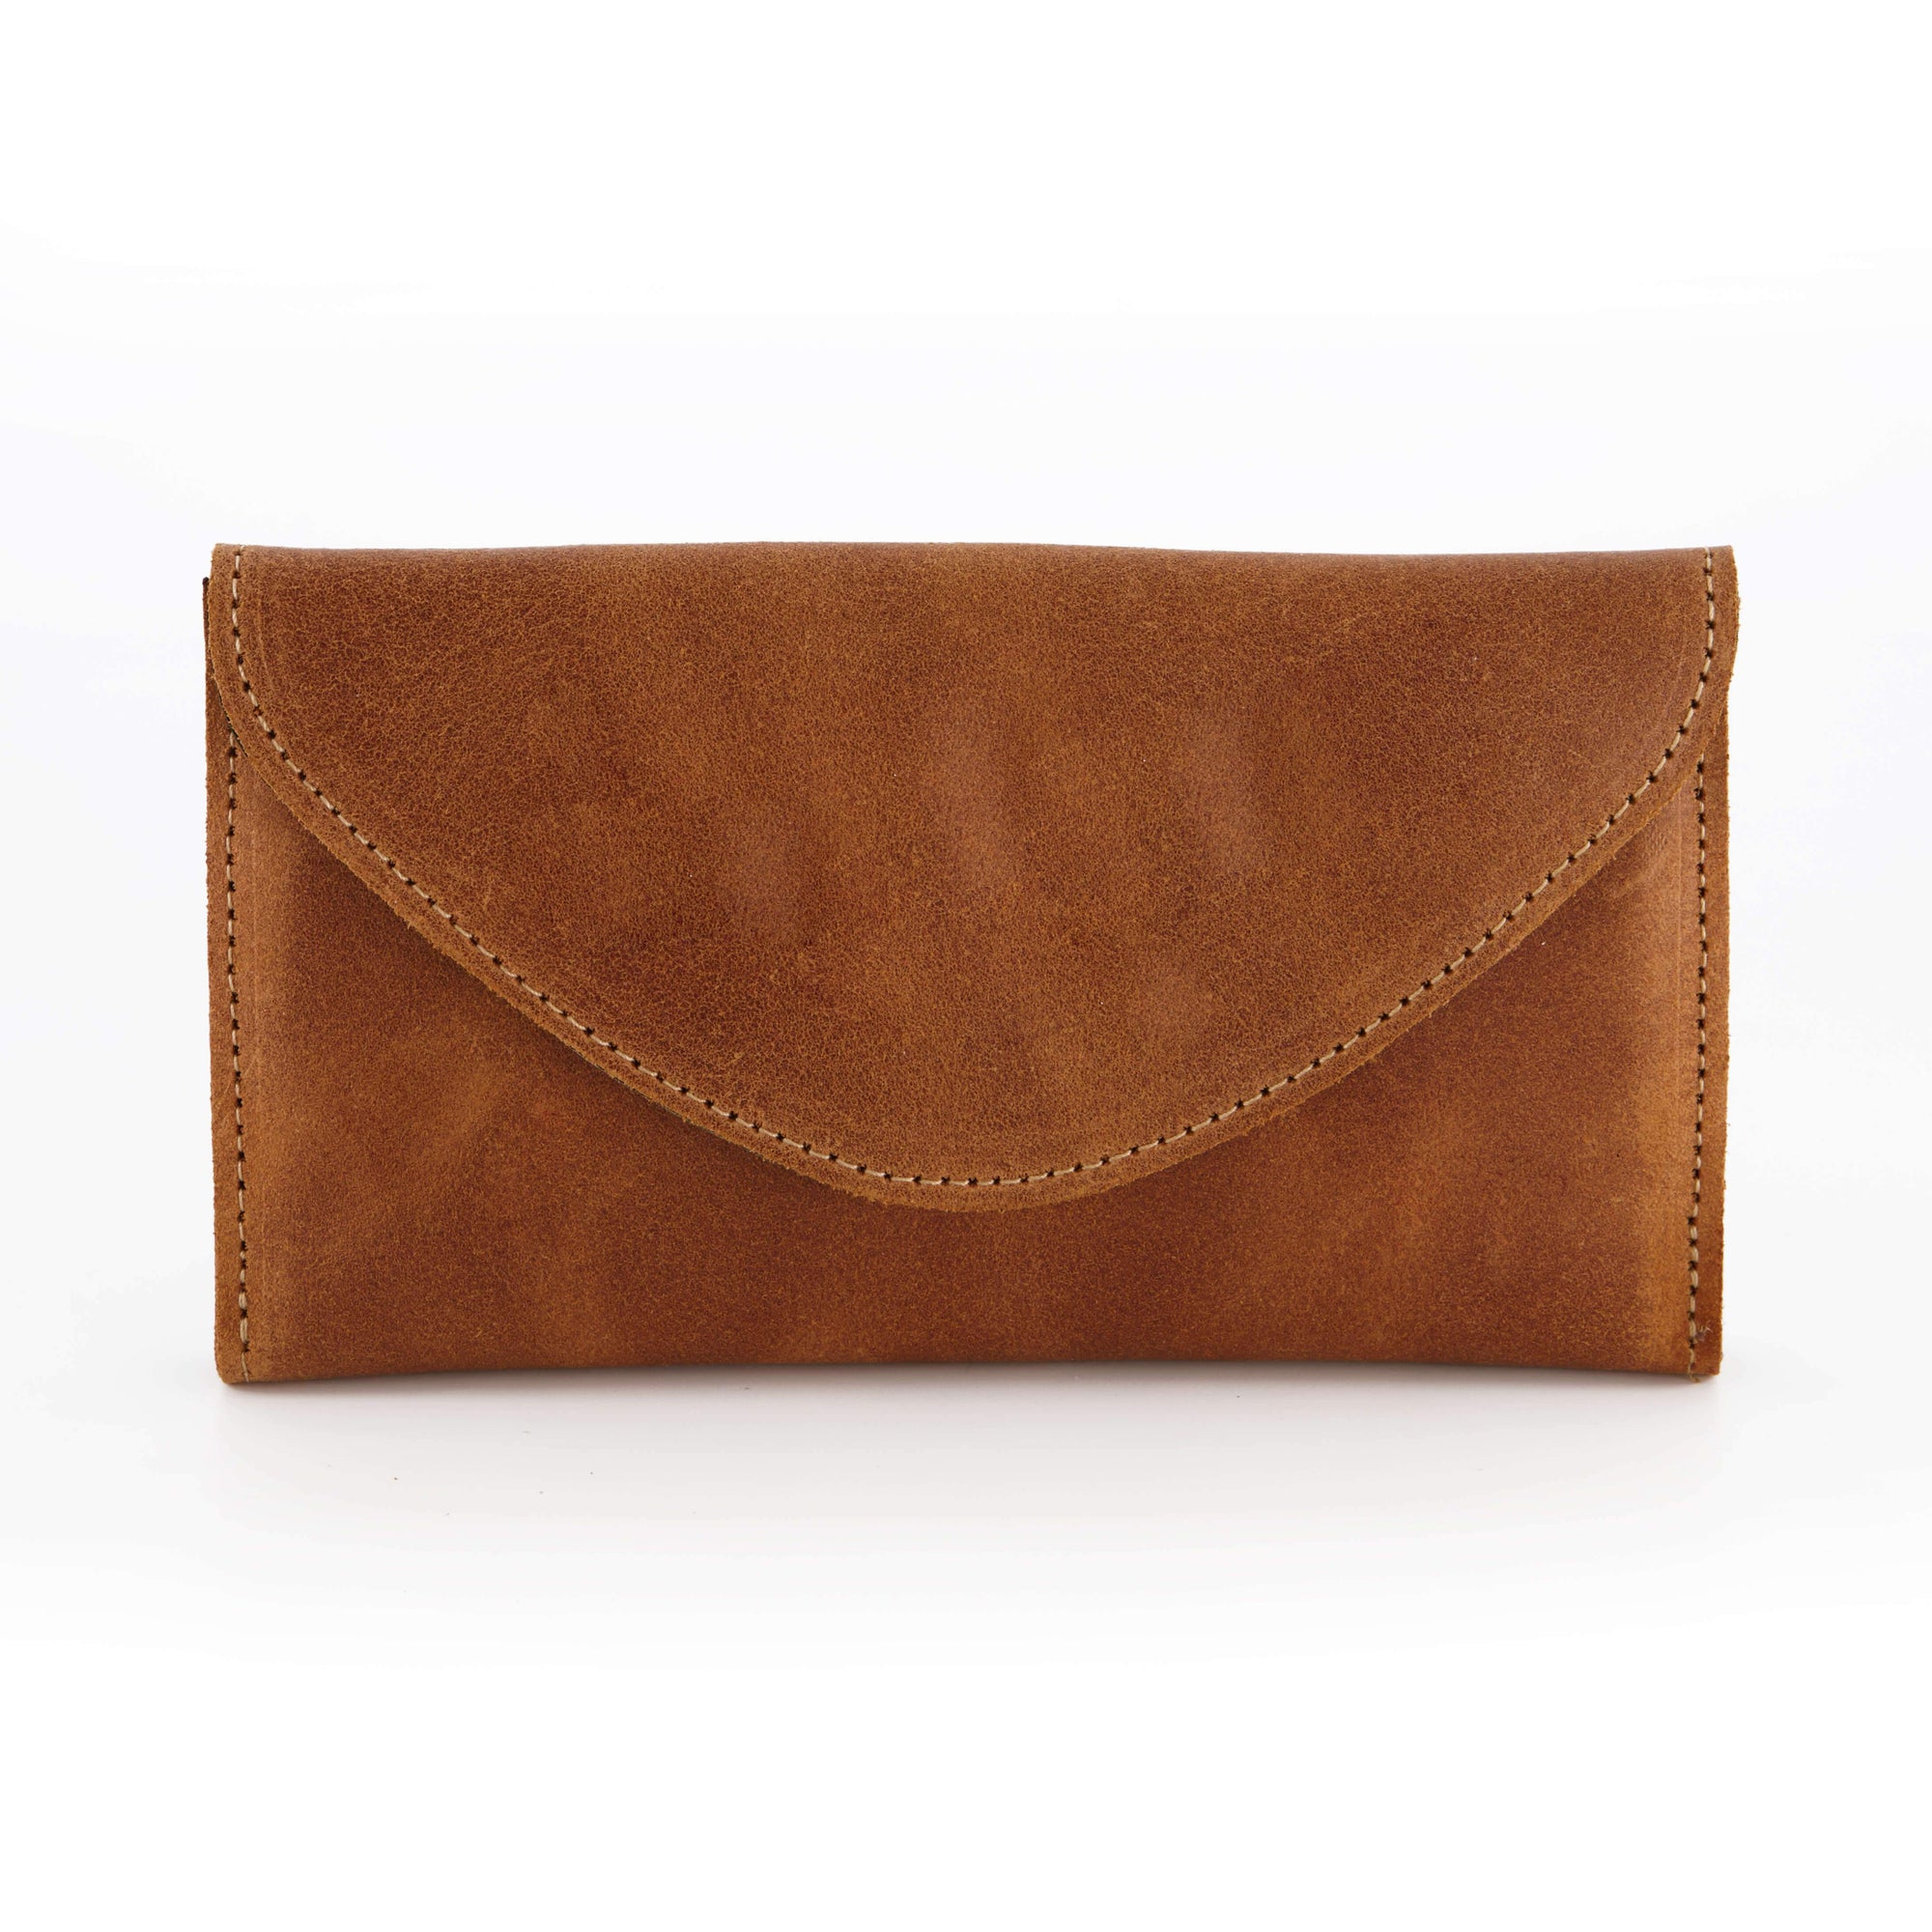 brown leather wallet, women wallet, big wallet, leather wallet women, handmade wallet, leather cards holder wallet, handmade leather wallet, gift for her, printed leather wallet,Leather Brown Wallet ||Brown||